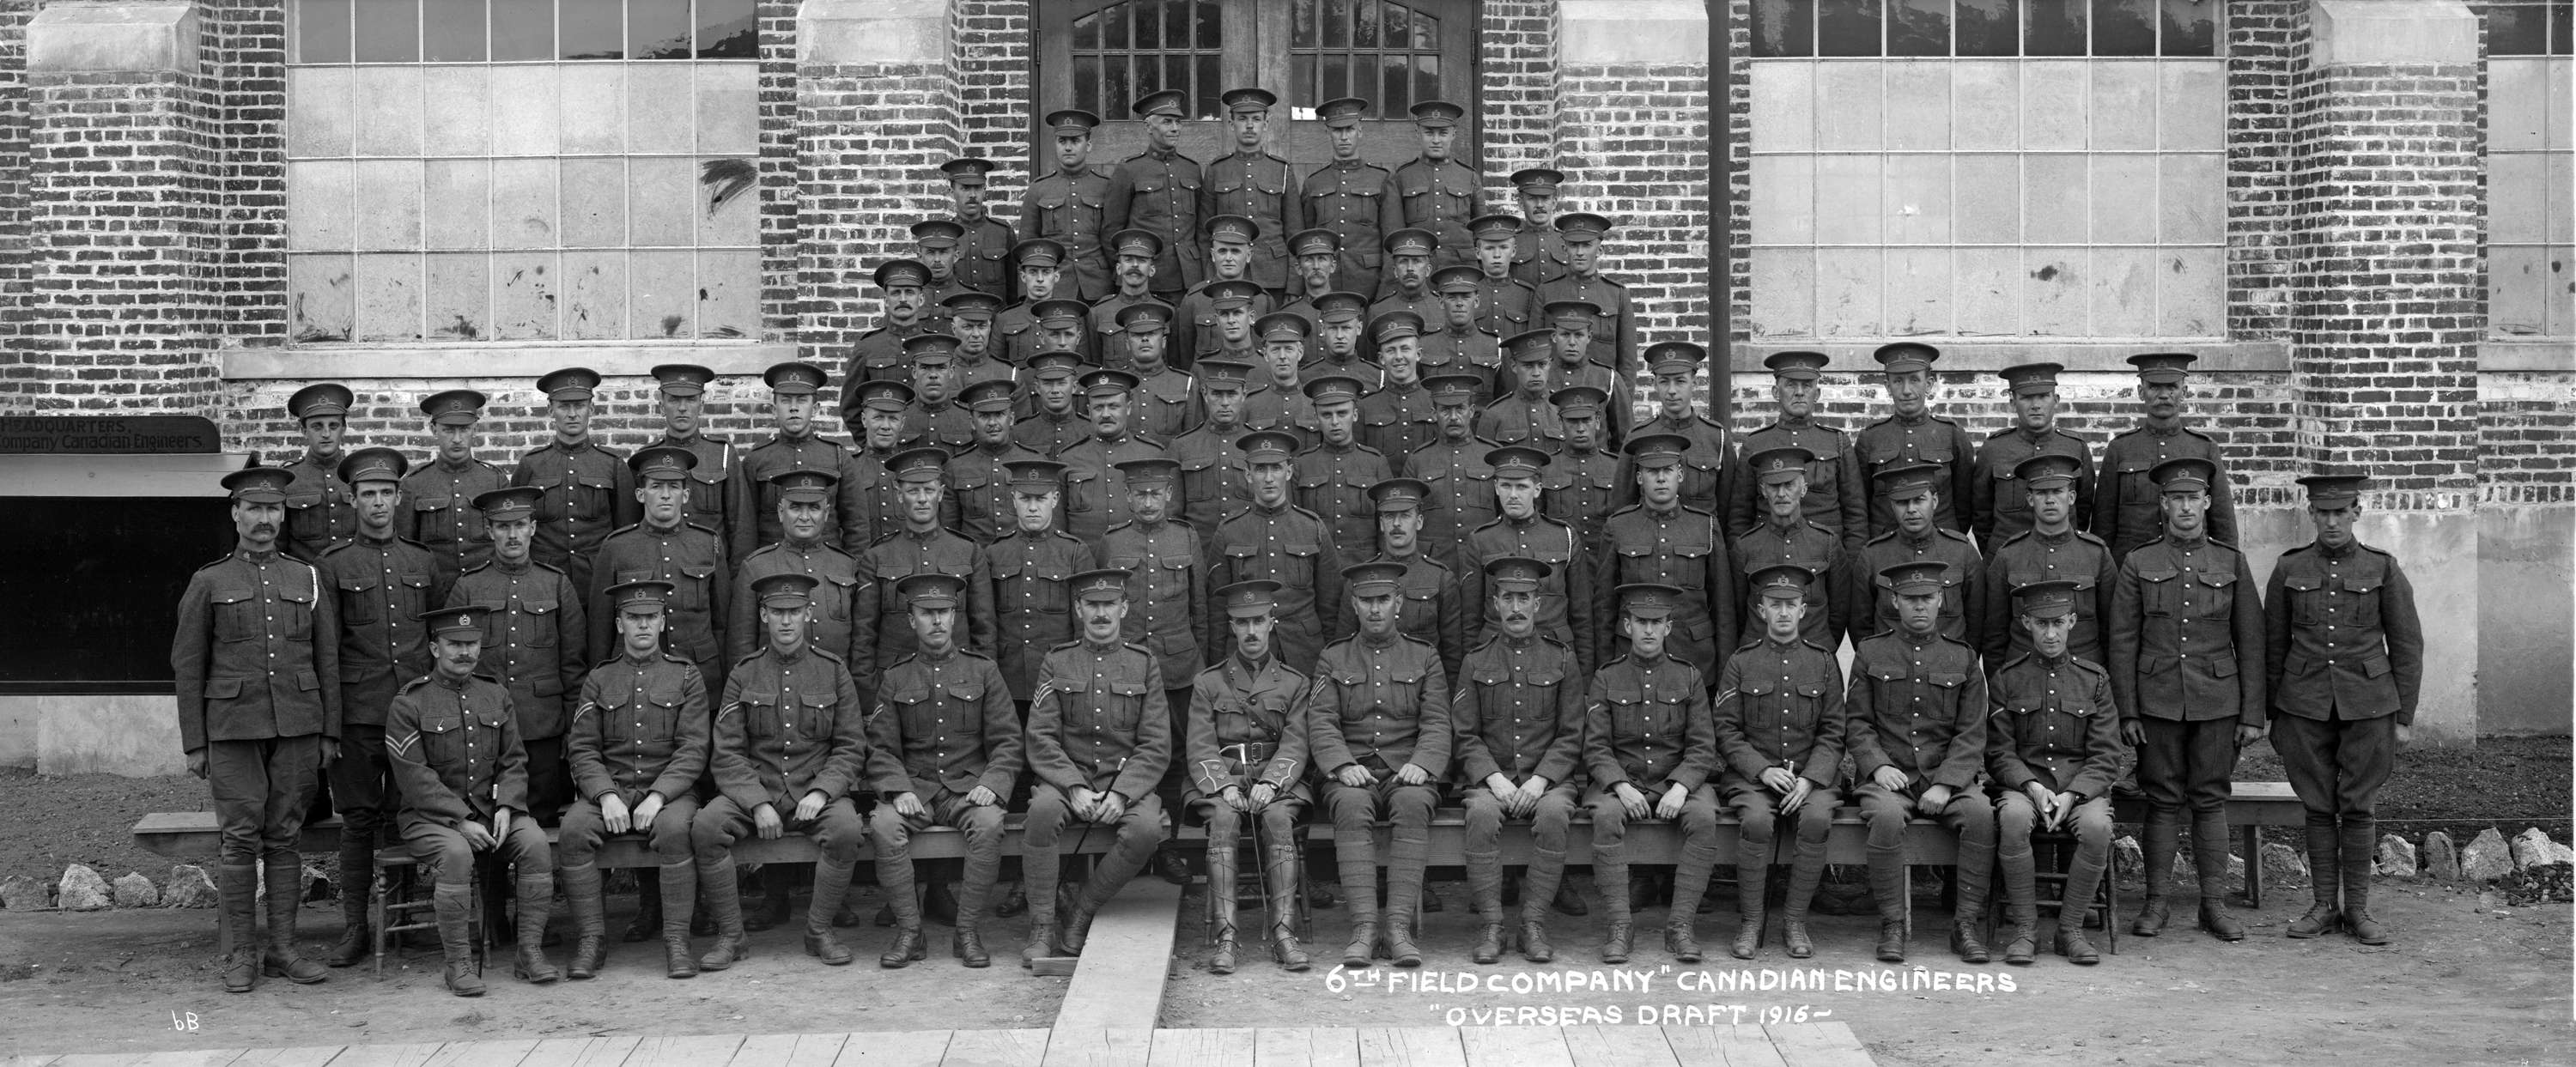 6th Field Company Canadian Engineers Overseas Draft 1916.jpg